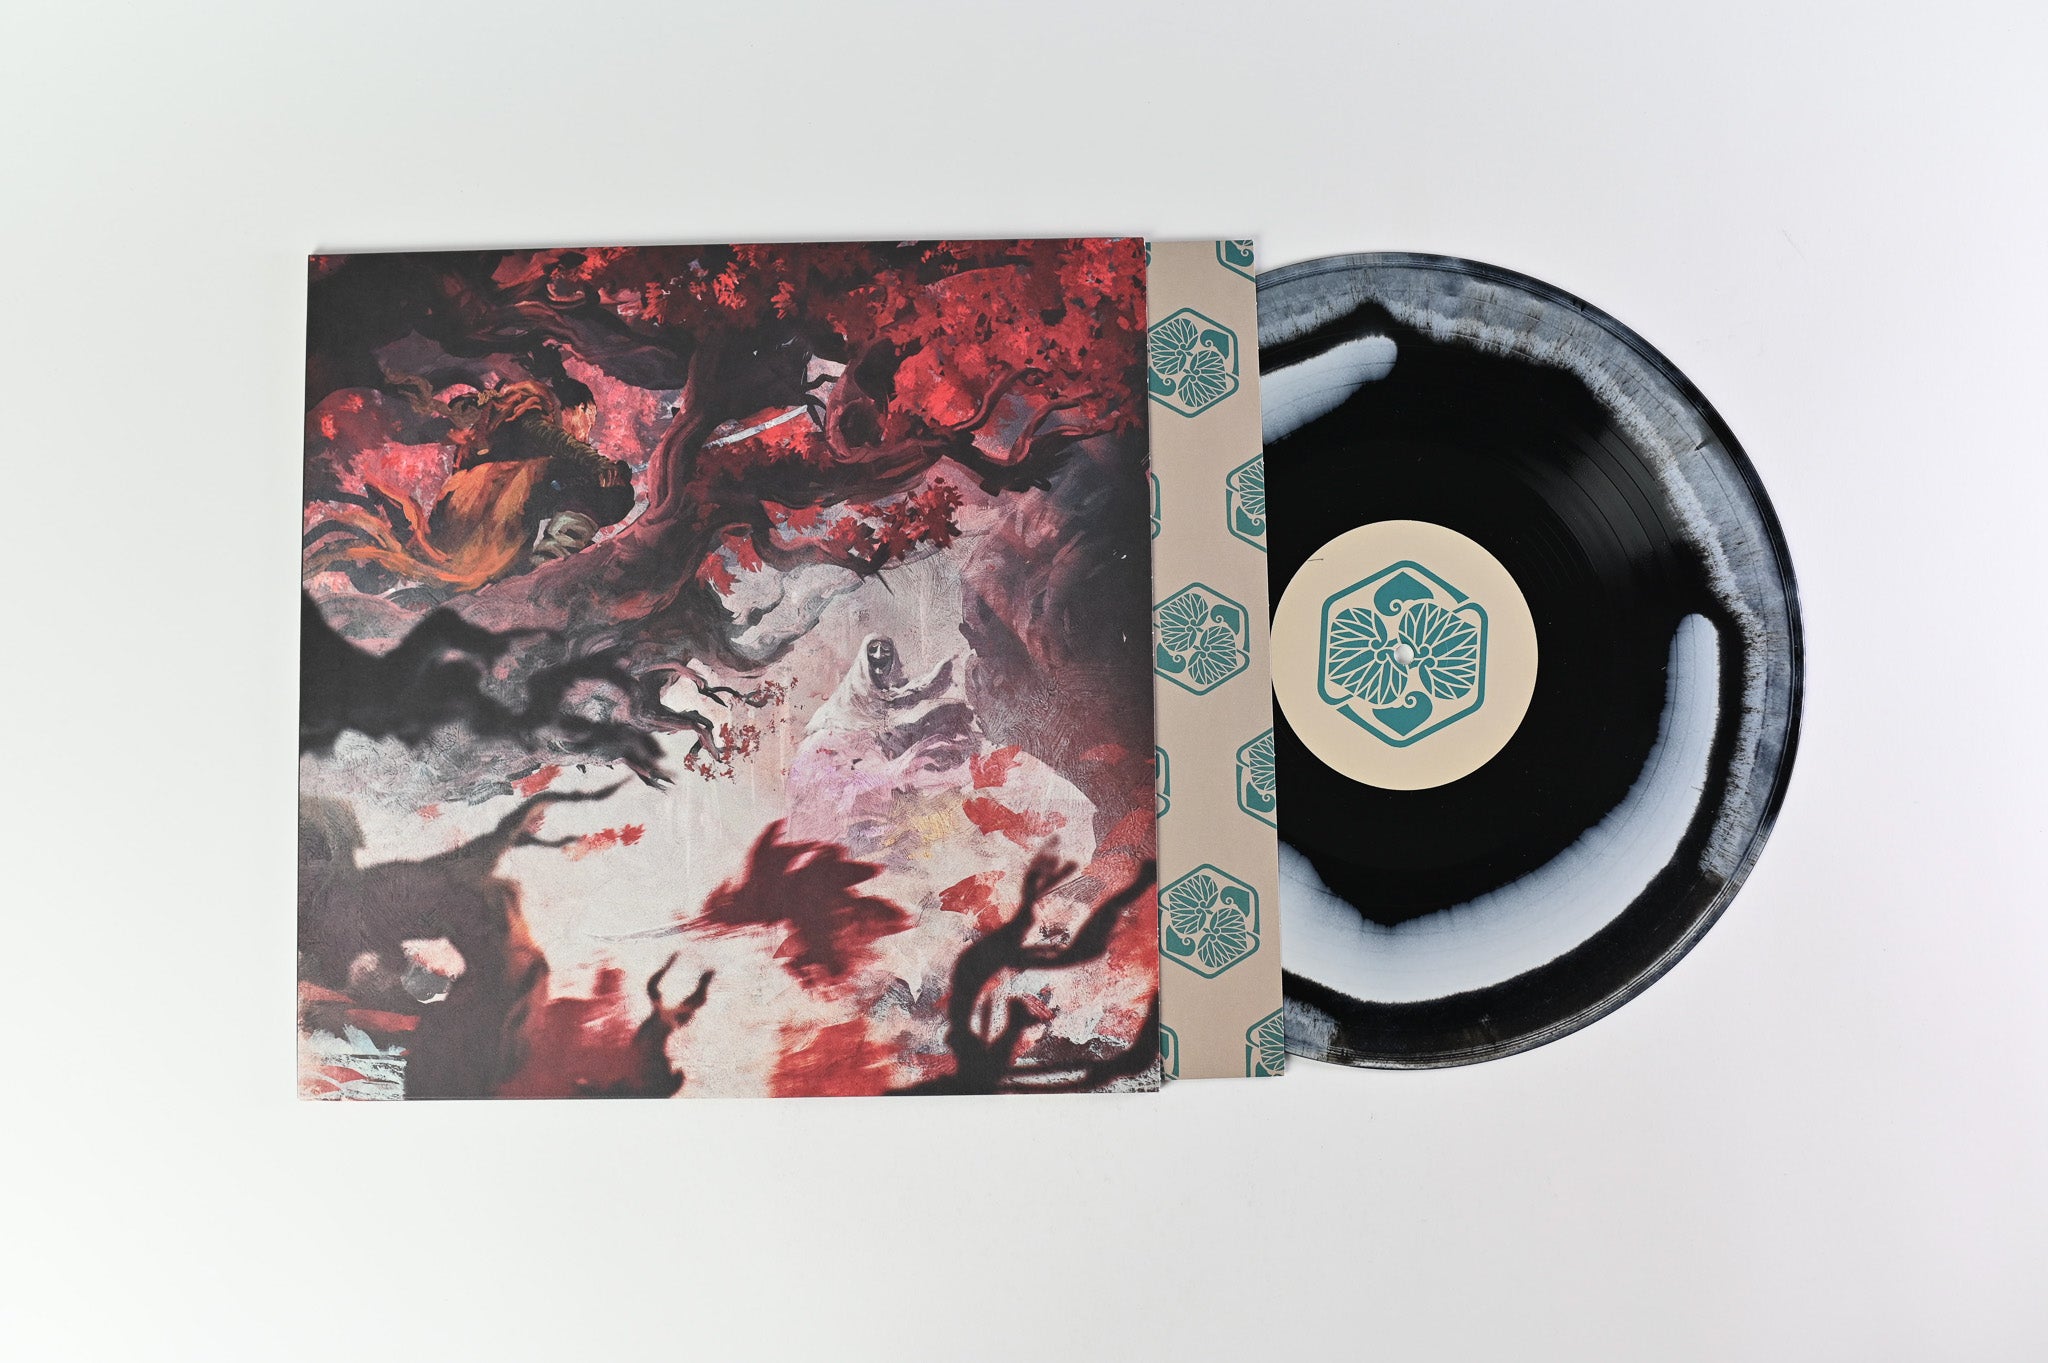 Yuka Kitamura - Sekiro: Shadows Die Twice Limited Edition Box Sets on Laced Records Cream and Black Vinyl